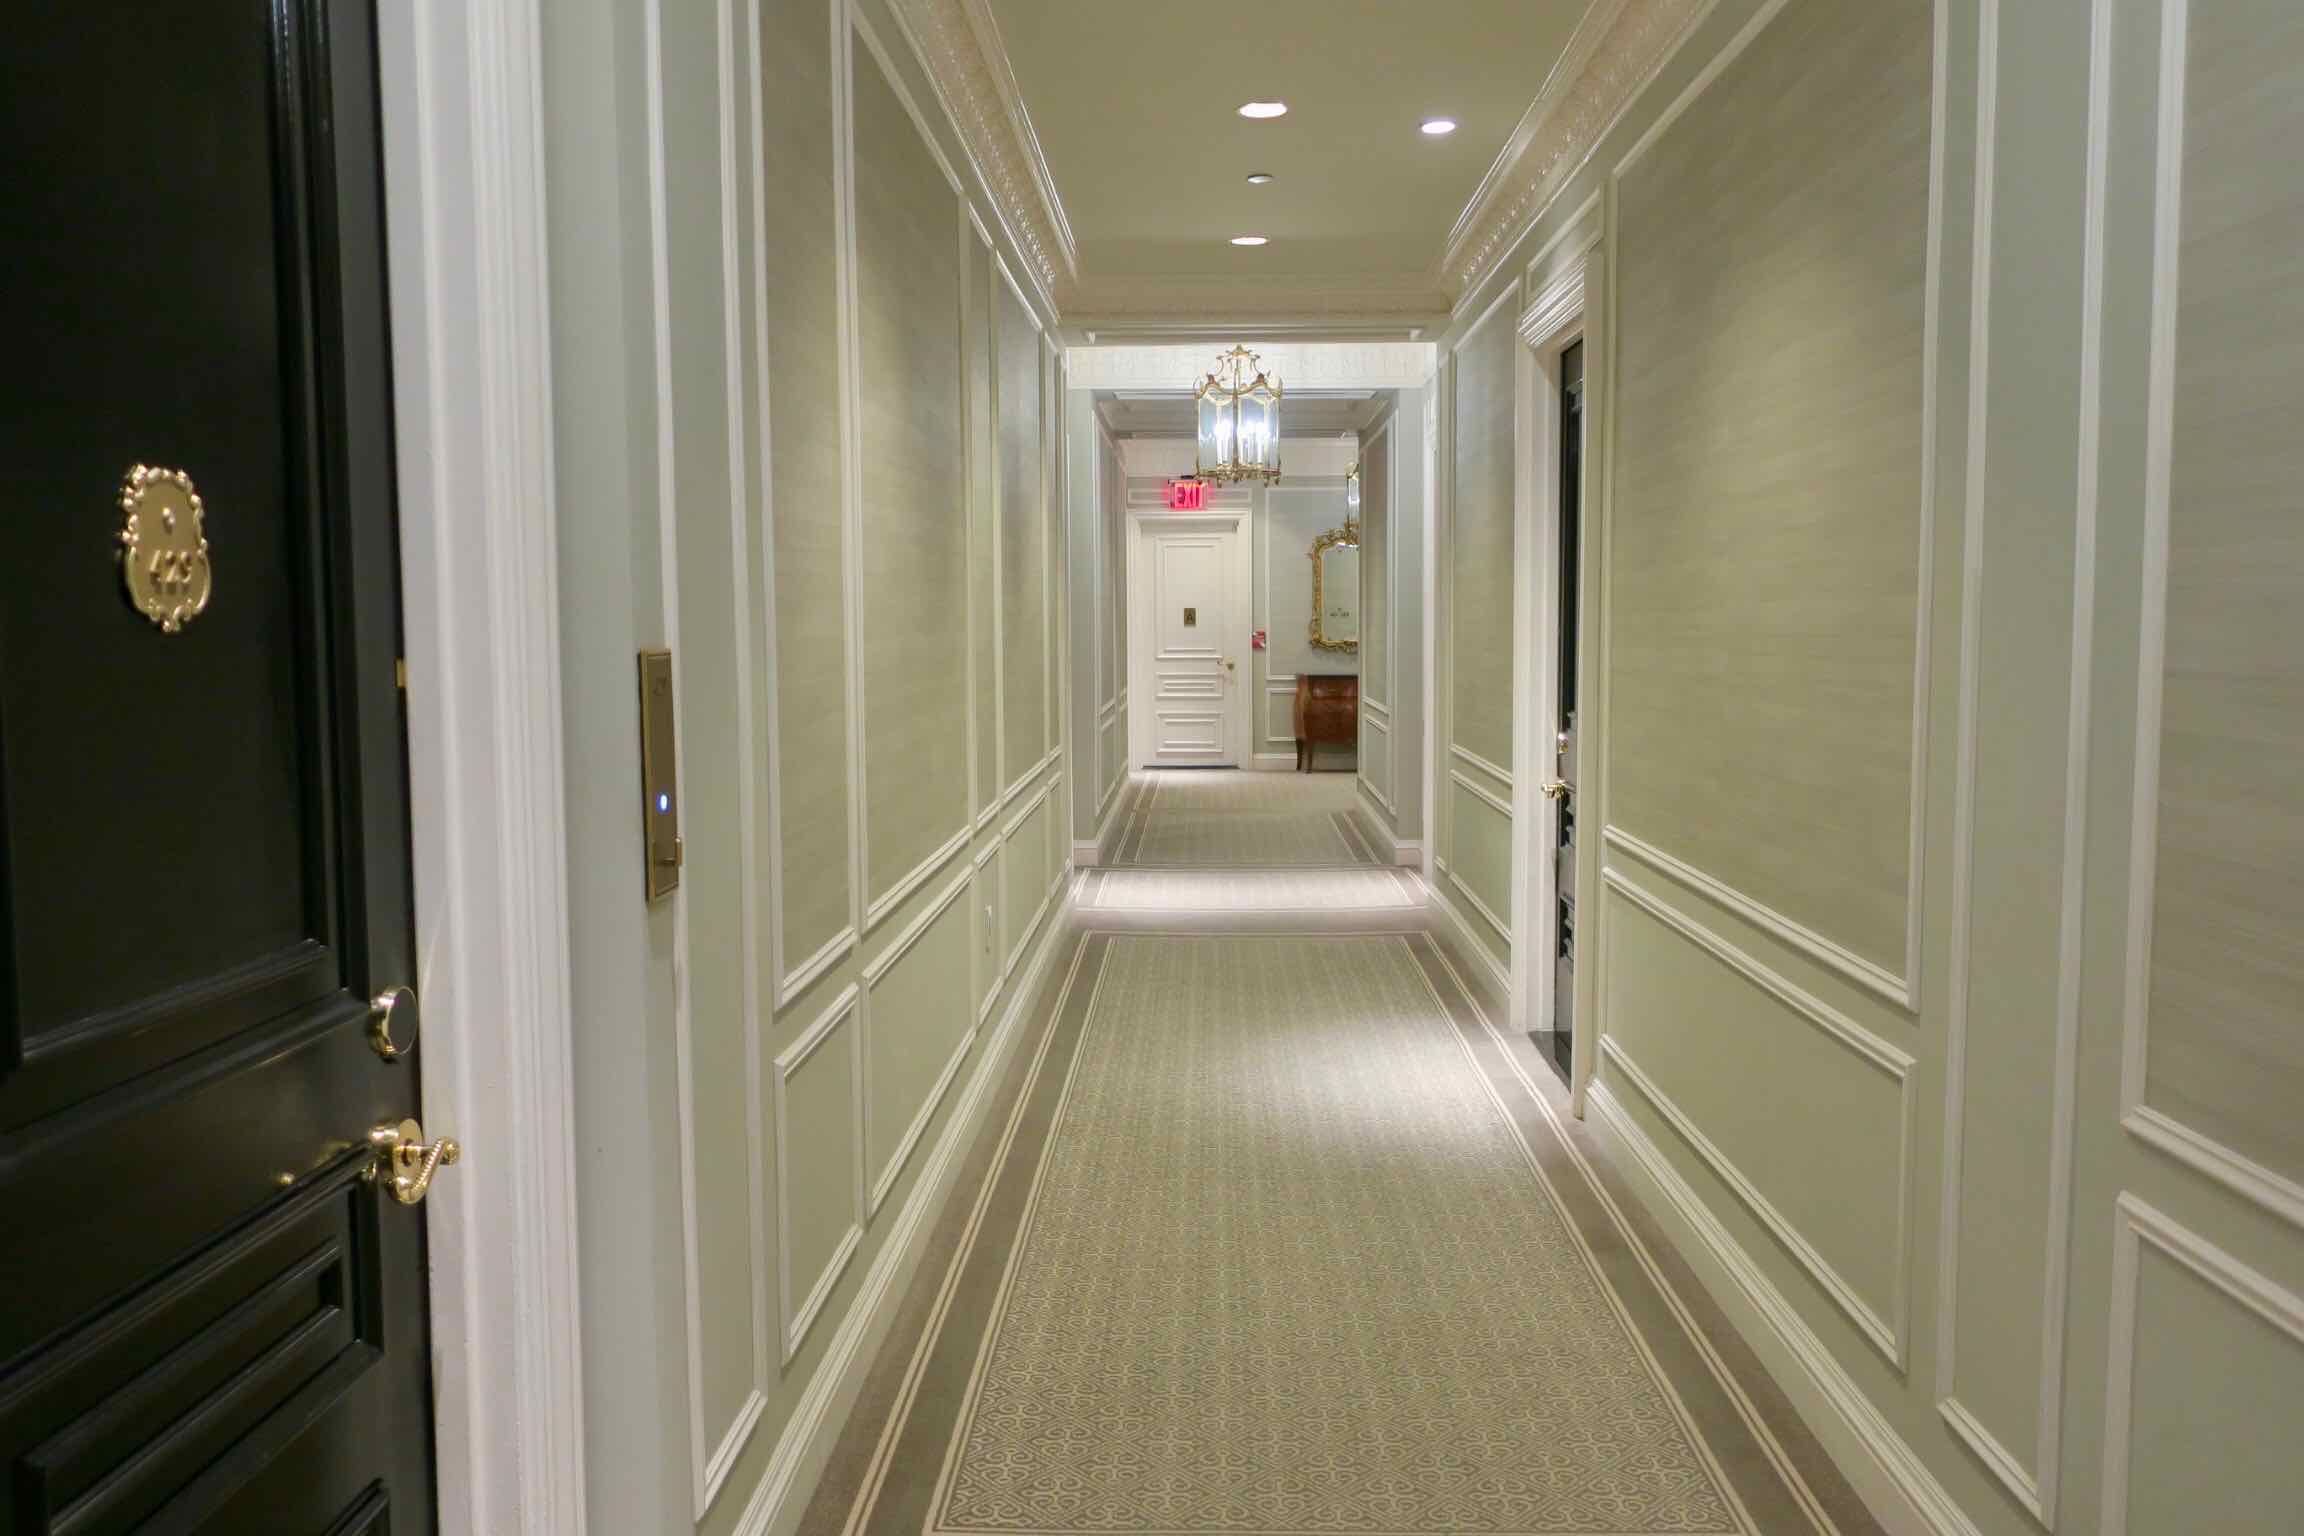 The St. Regis New York room corridors